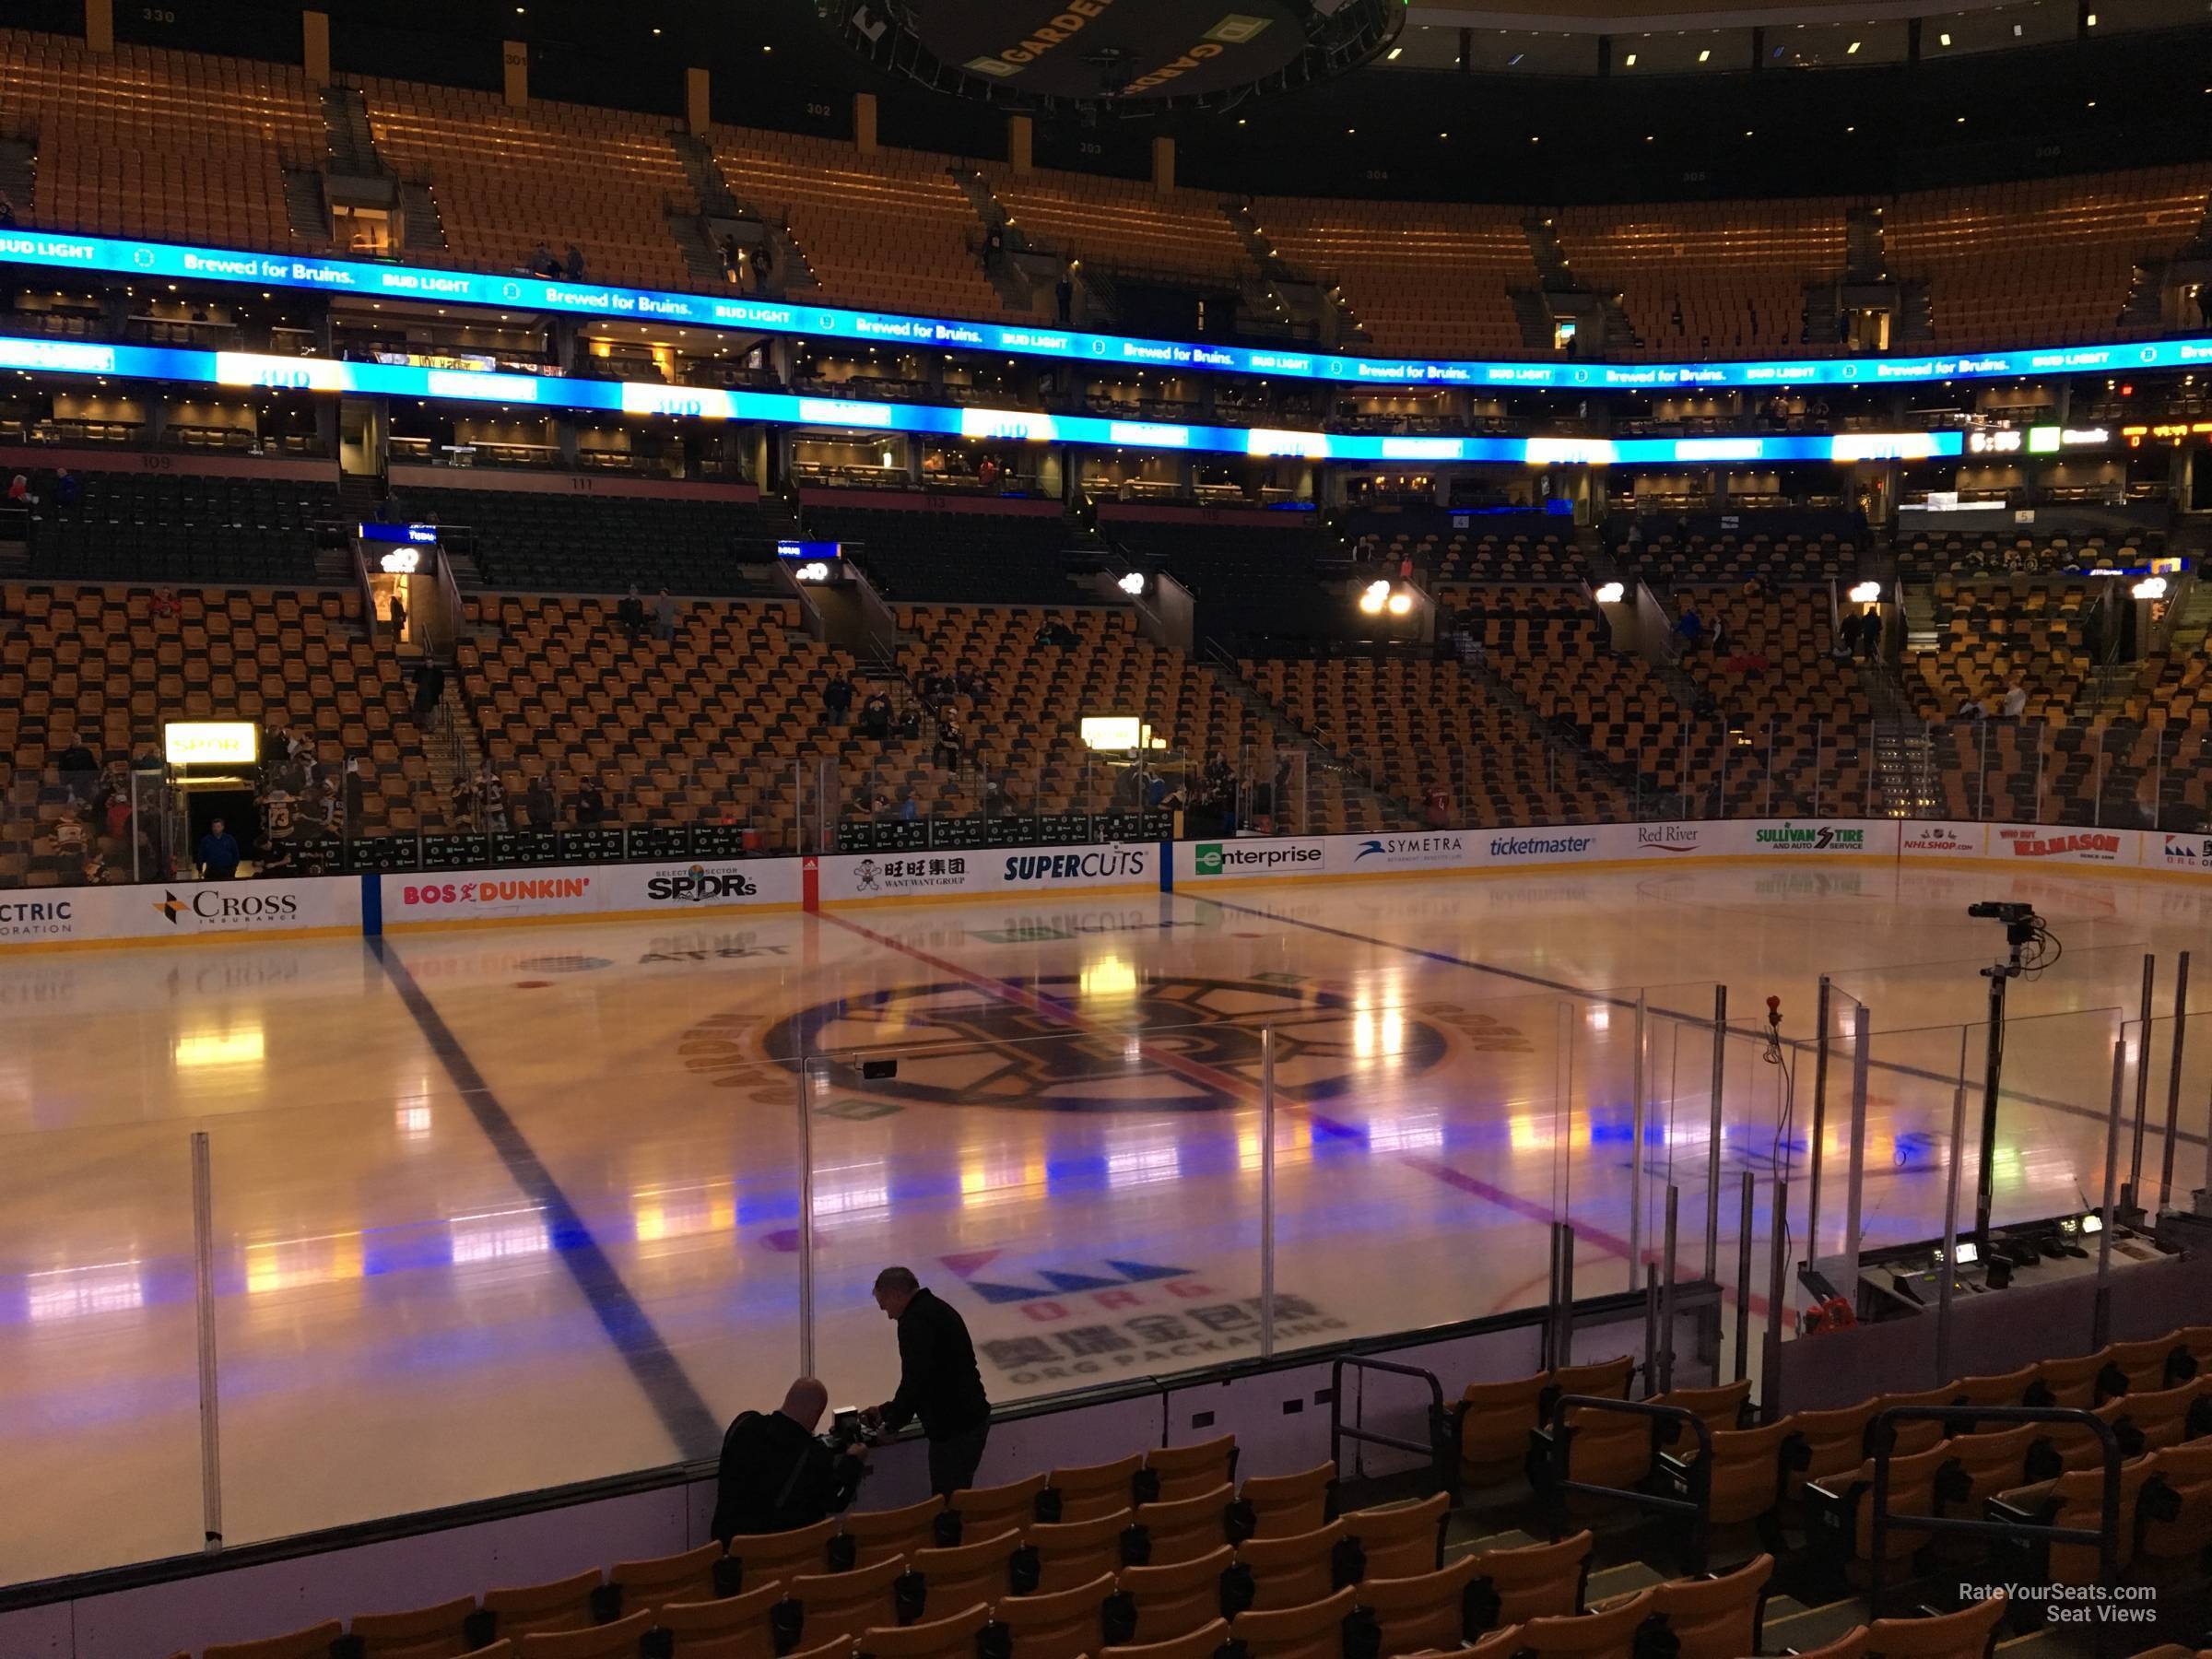 TD Garden – Boston Bruins